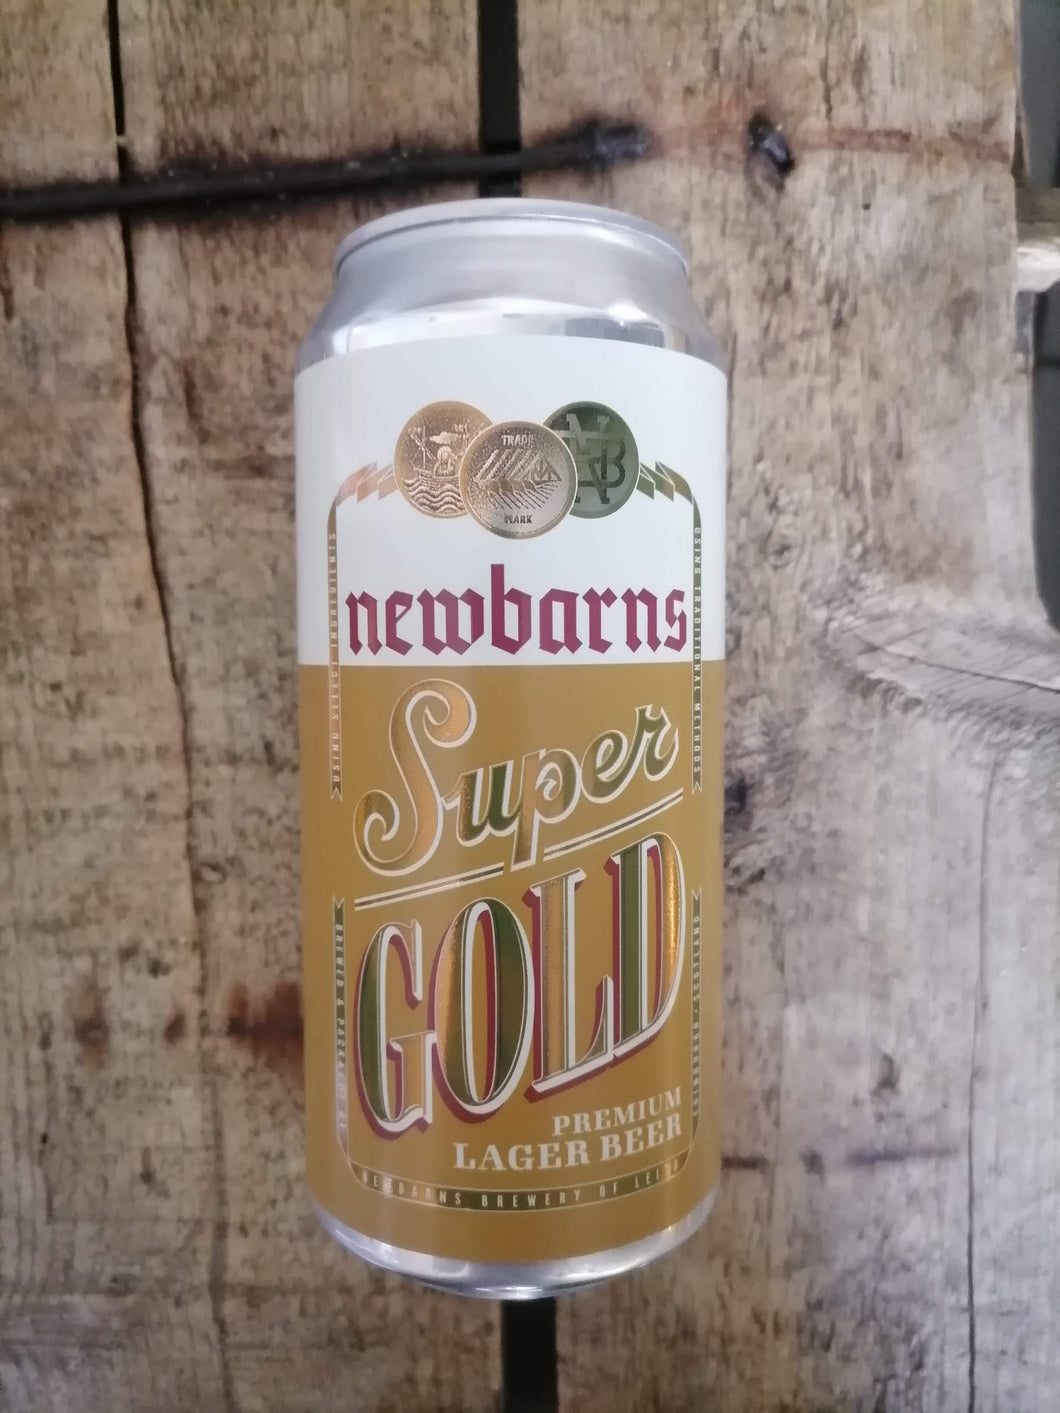 Newbarns Super Gold 4.8% (440ml can)